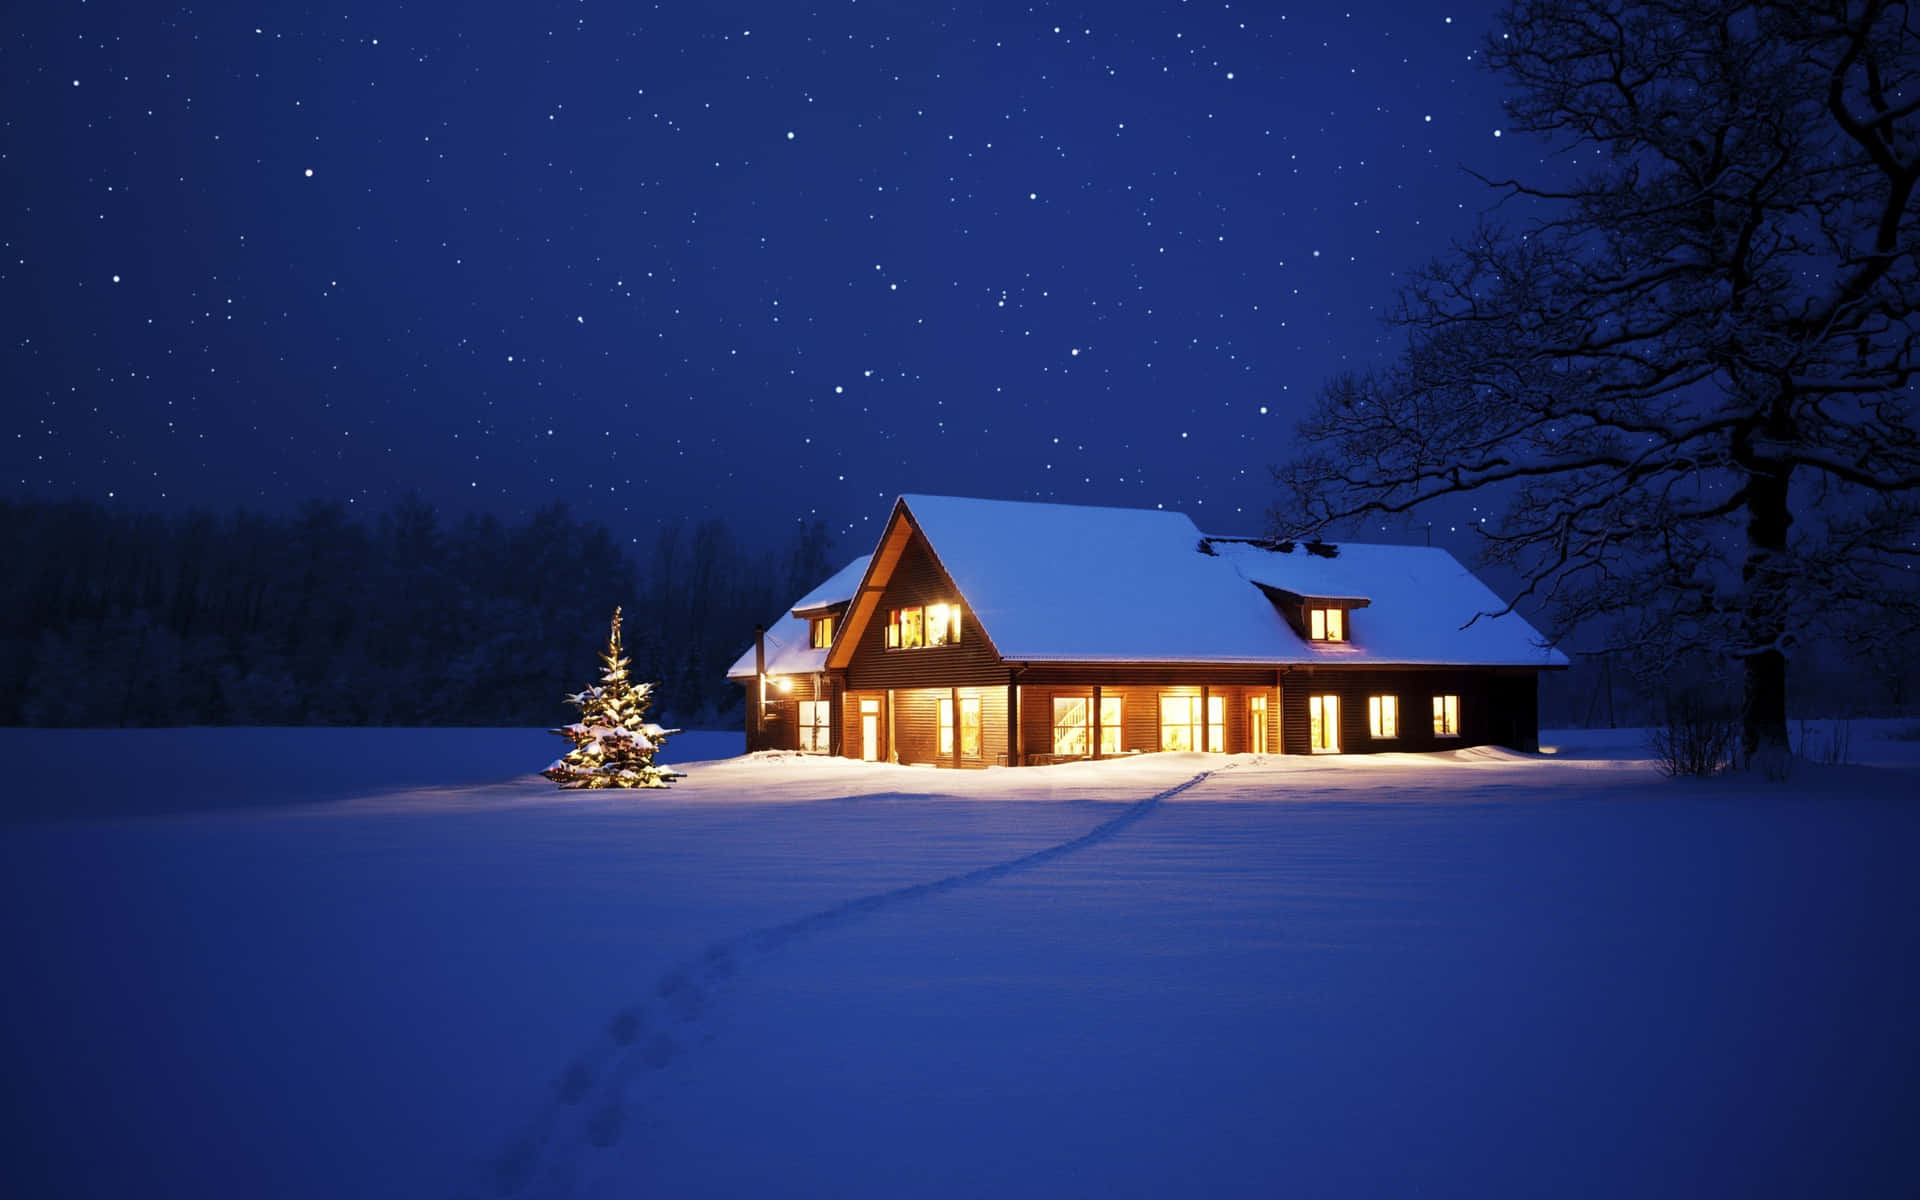 Winter Night Desktop With A Festive House Wallpaper